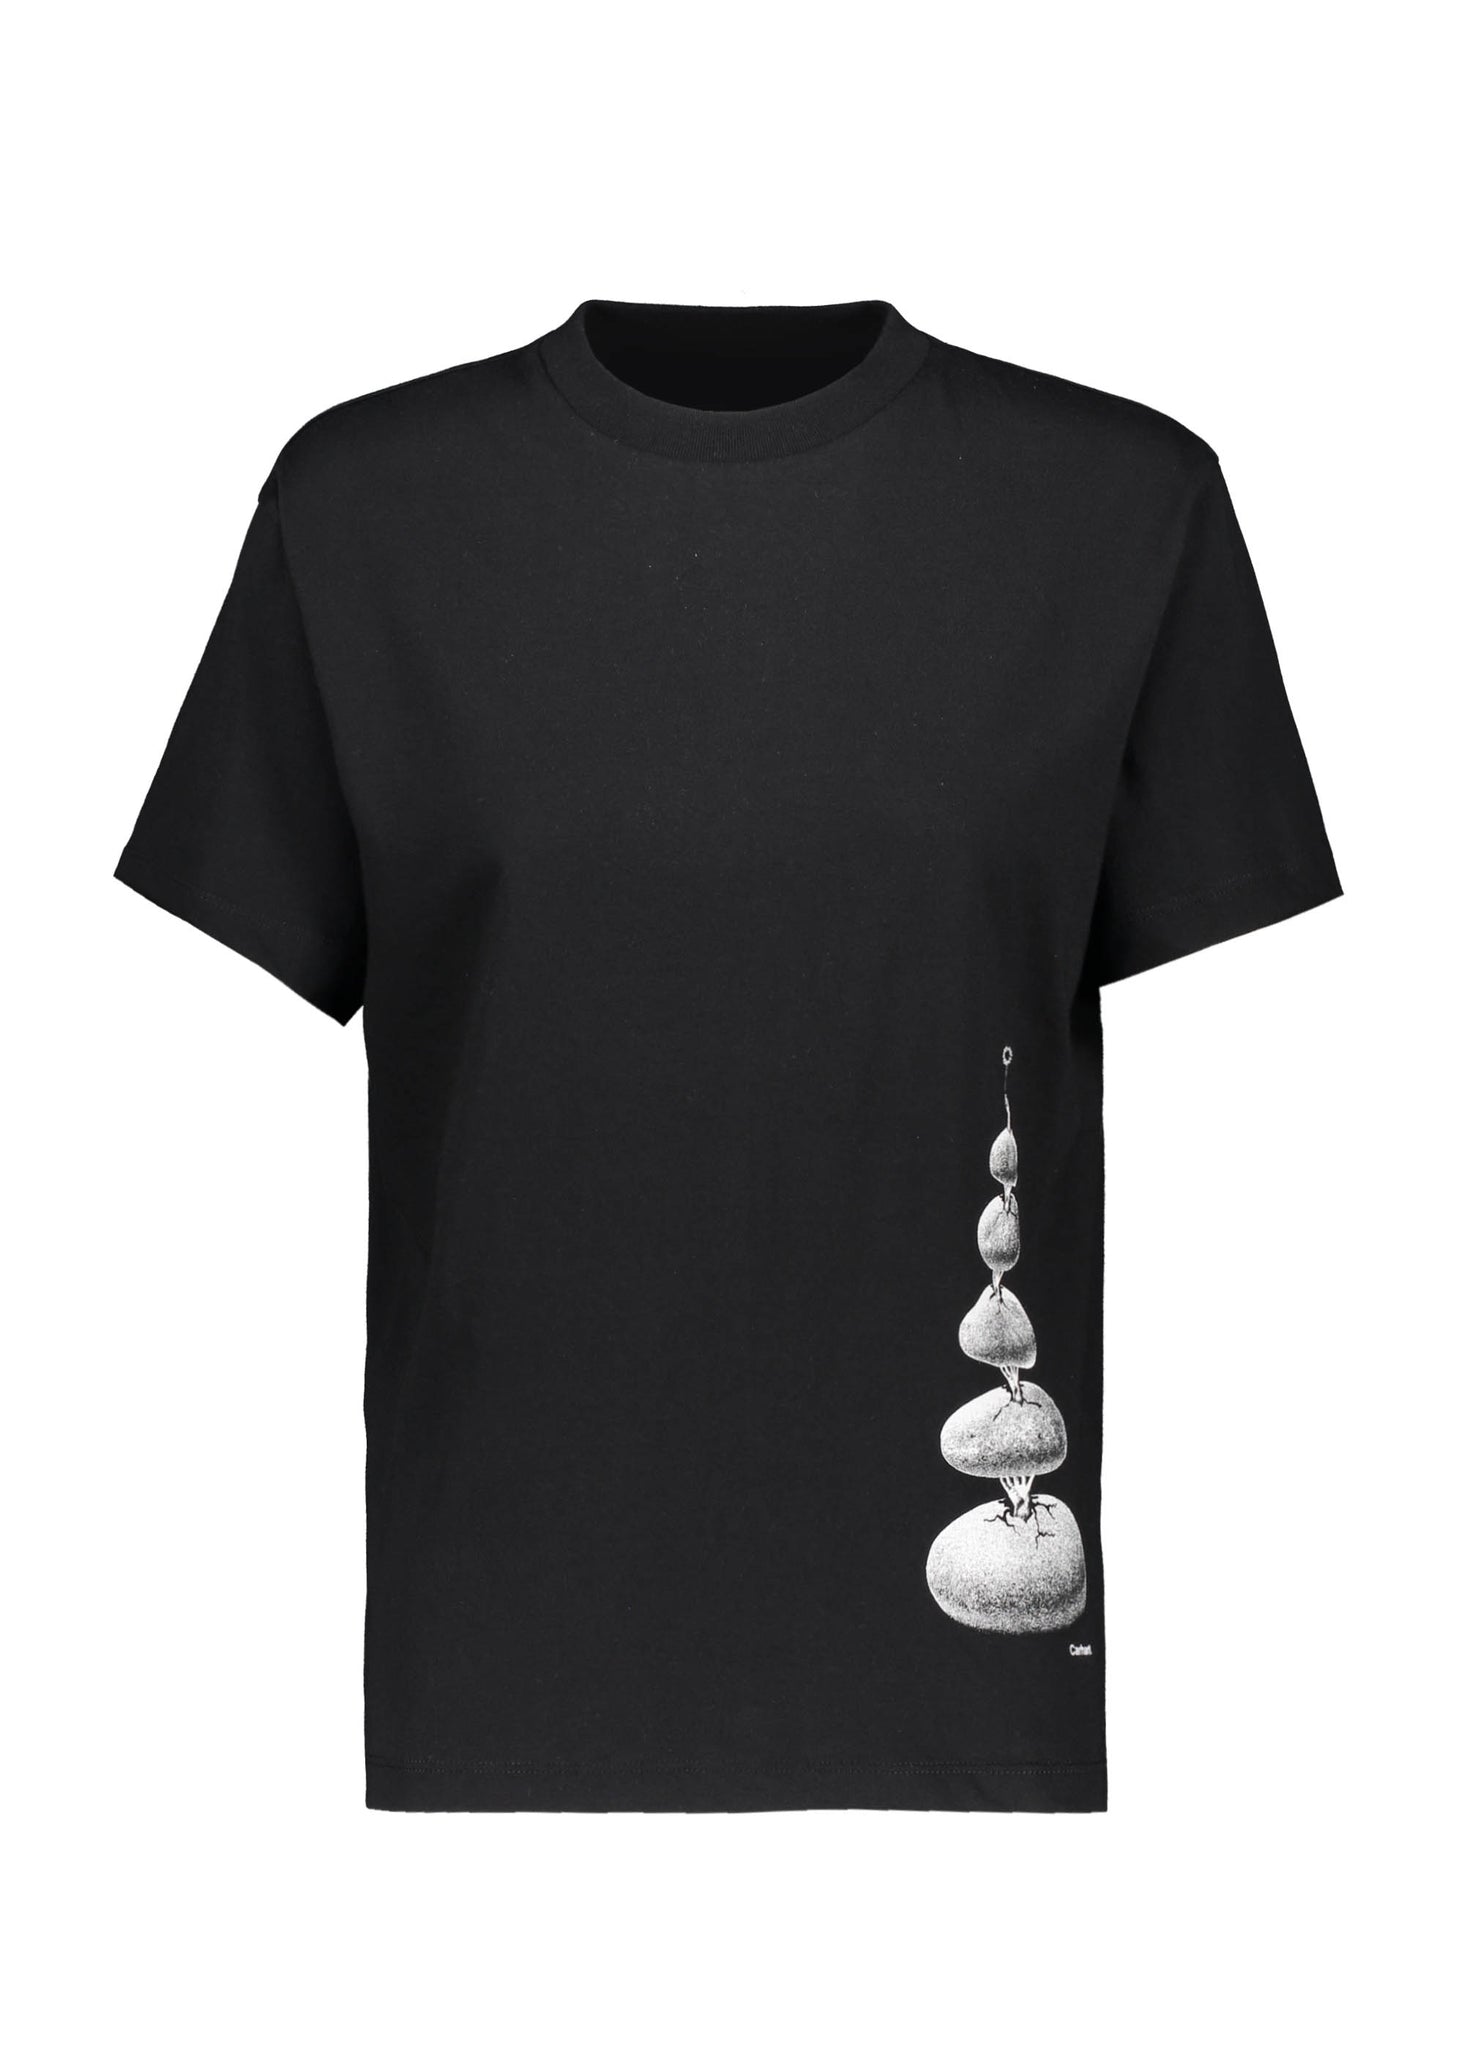 Carhartt Greenhouse T-shirt - Black